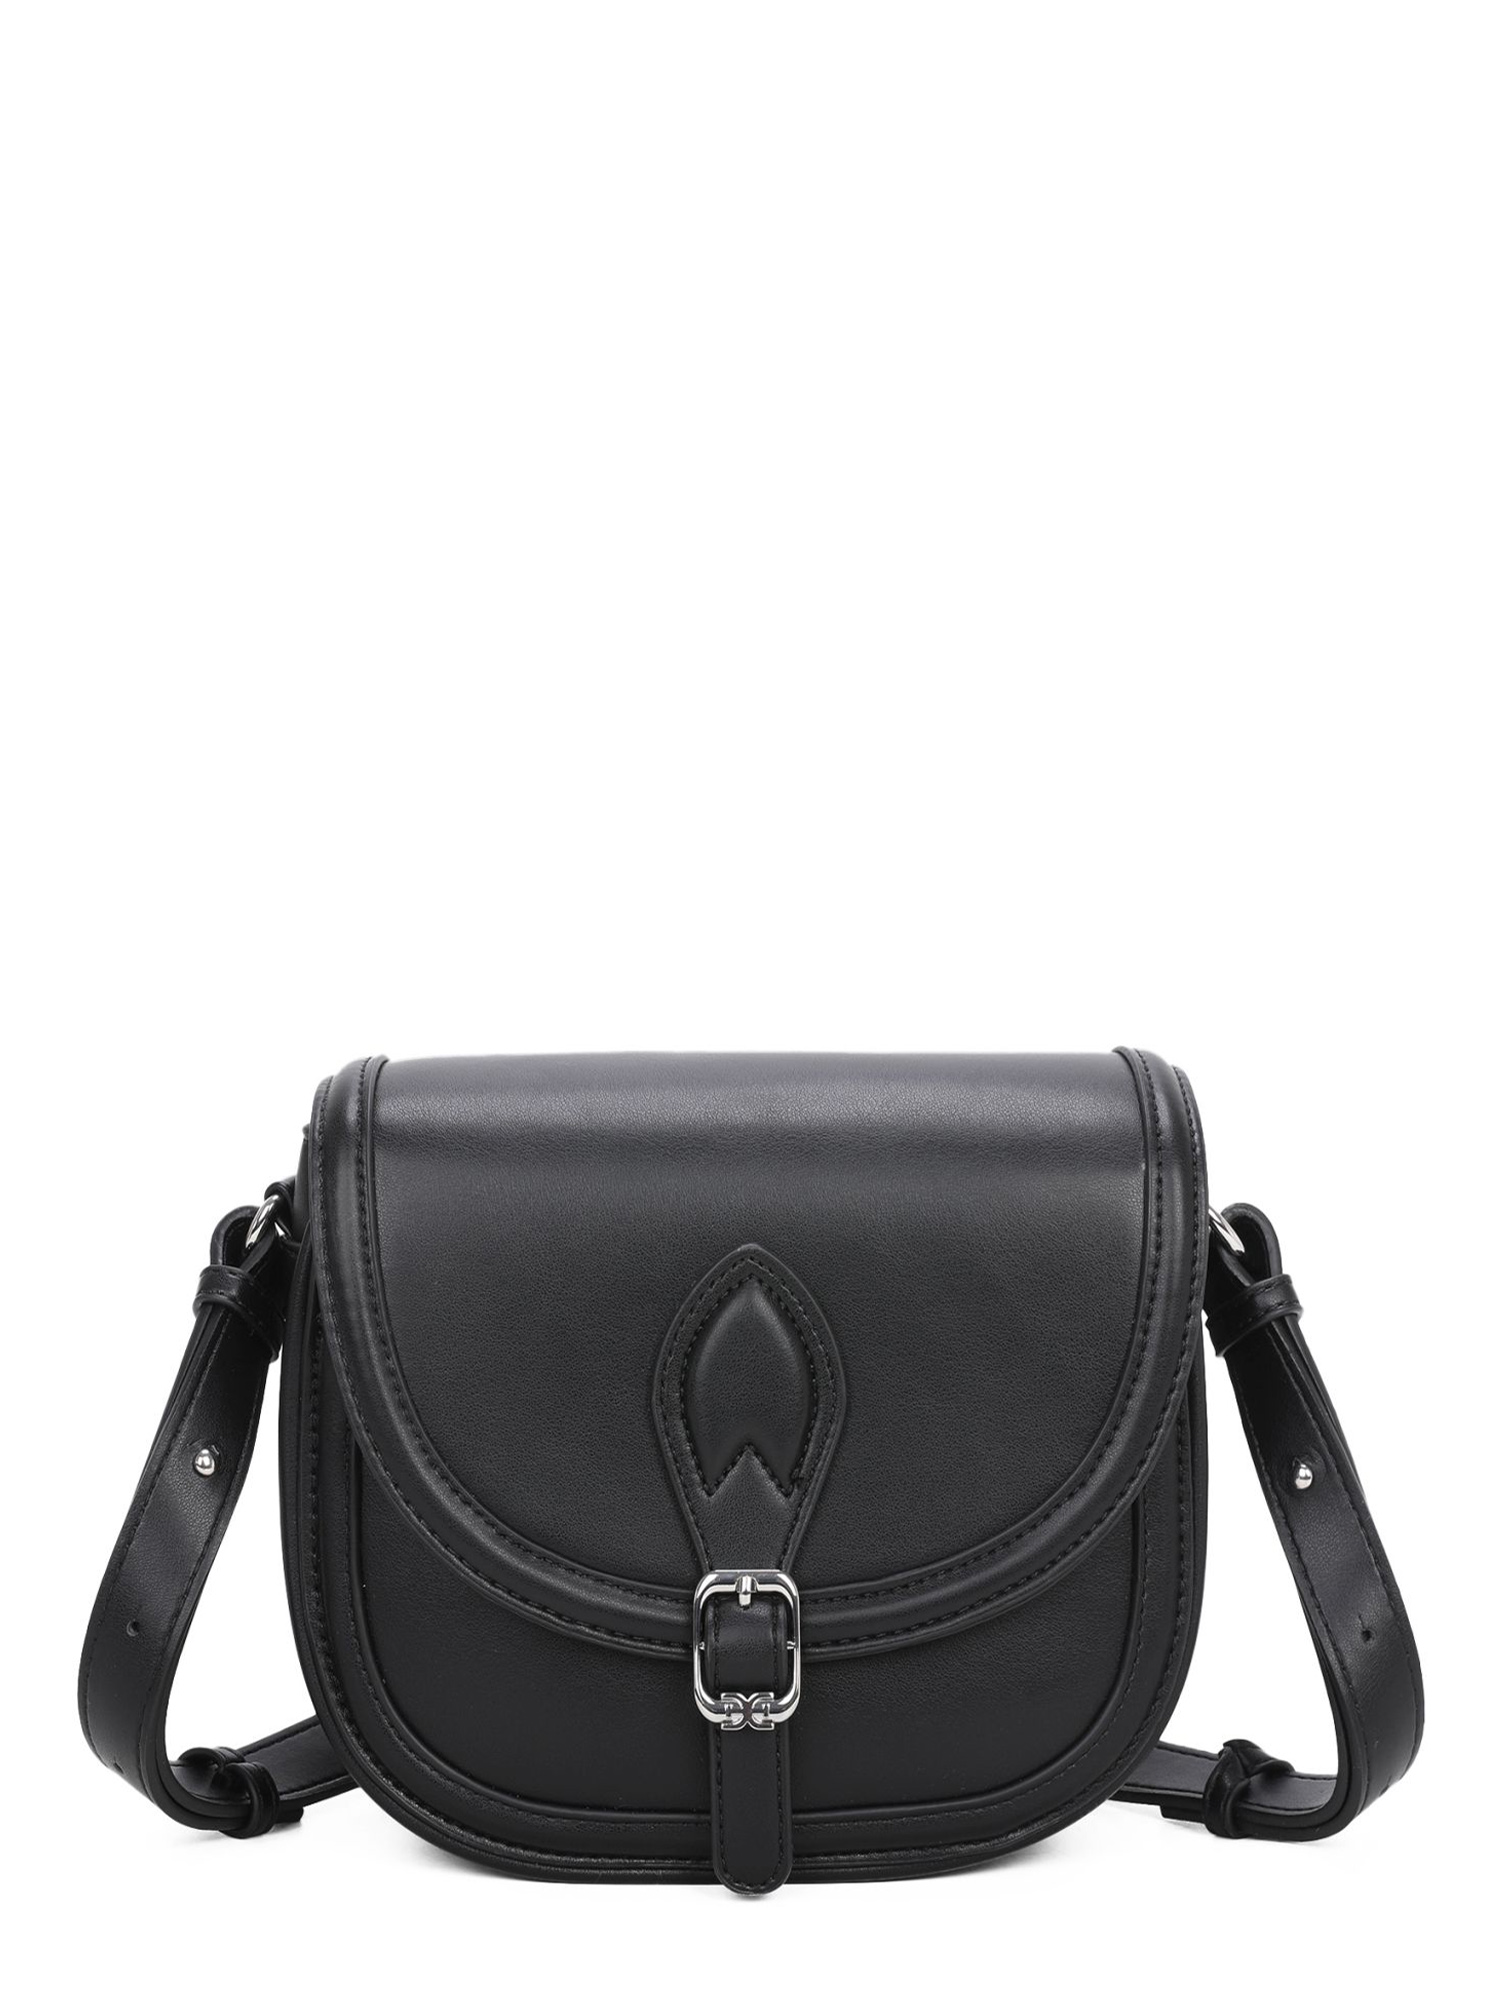 Sam Edelman Women's Giorgia Saddle Handbag, Black - image 1 of 6